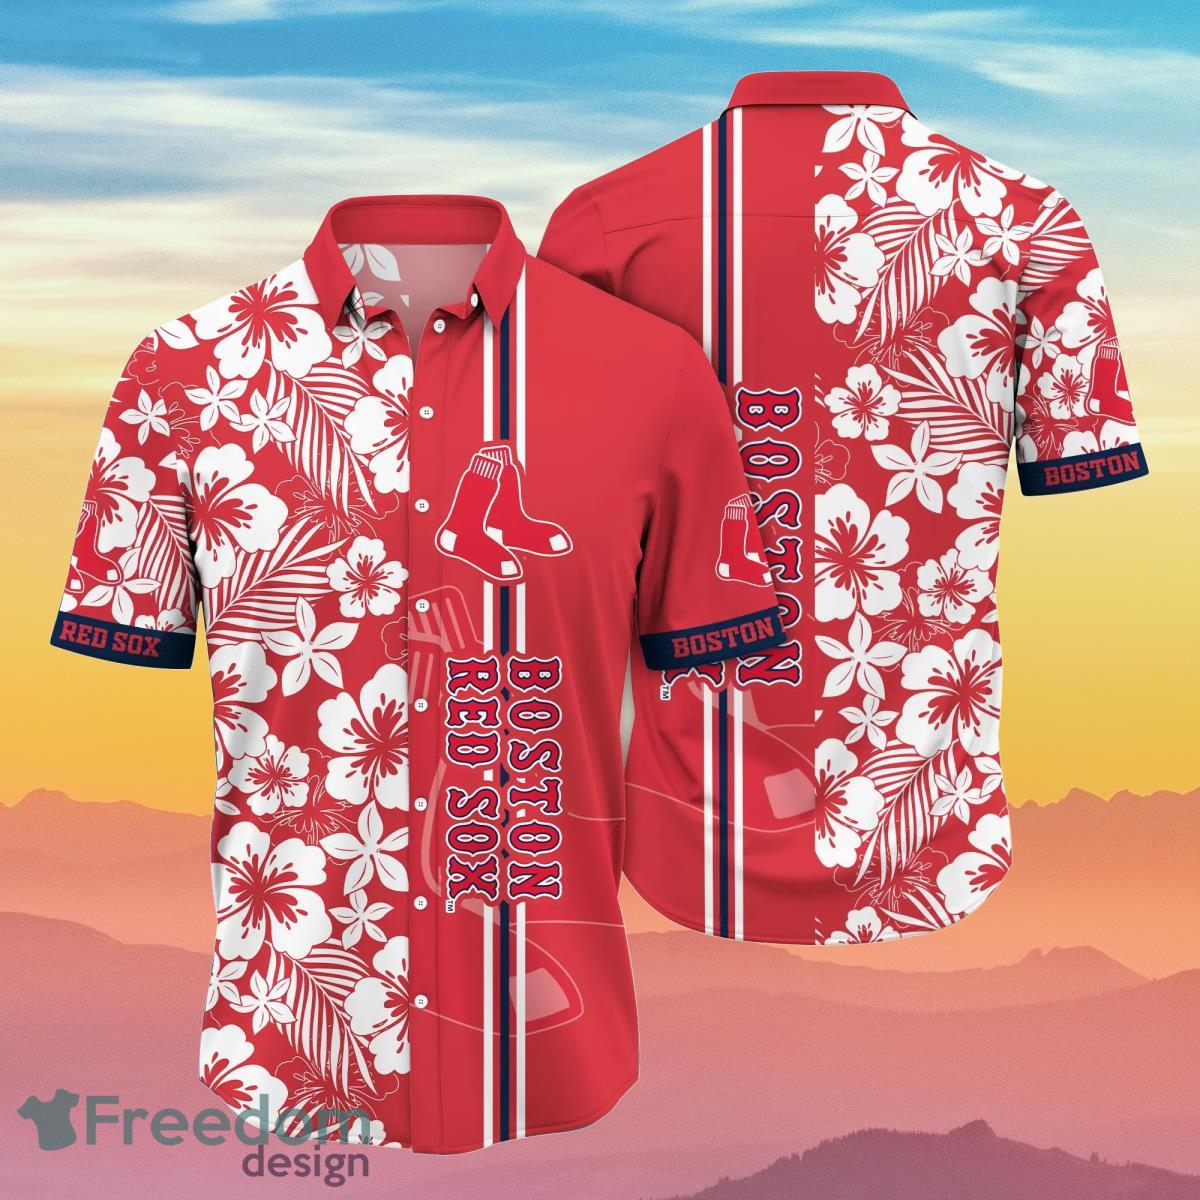 Boston Red Sox MLB Flower Hawaiian Shirt Summer Football Best Idea For Real  Fans - Freedomdesign